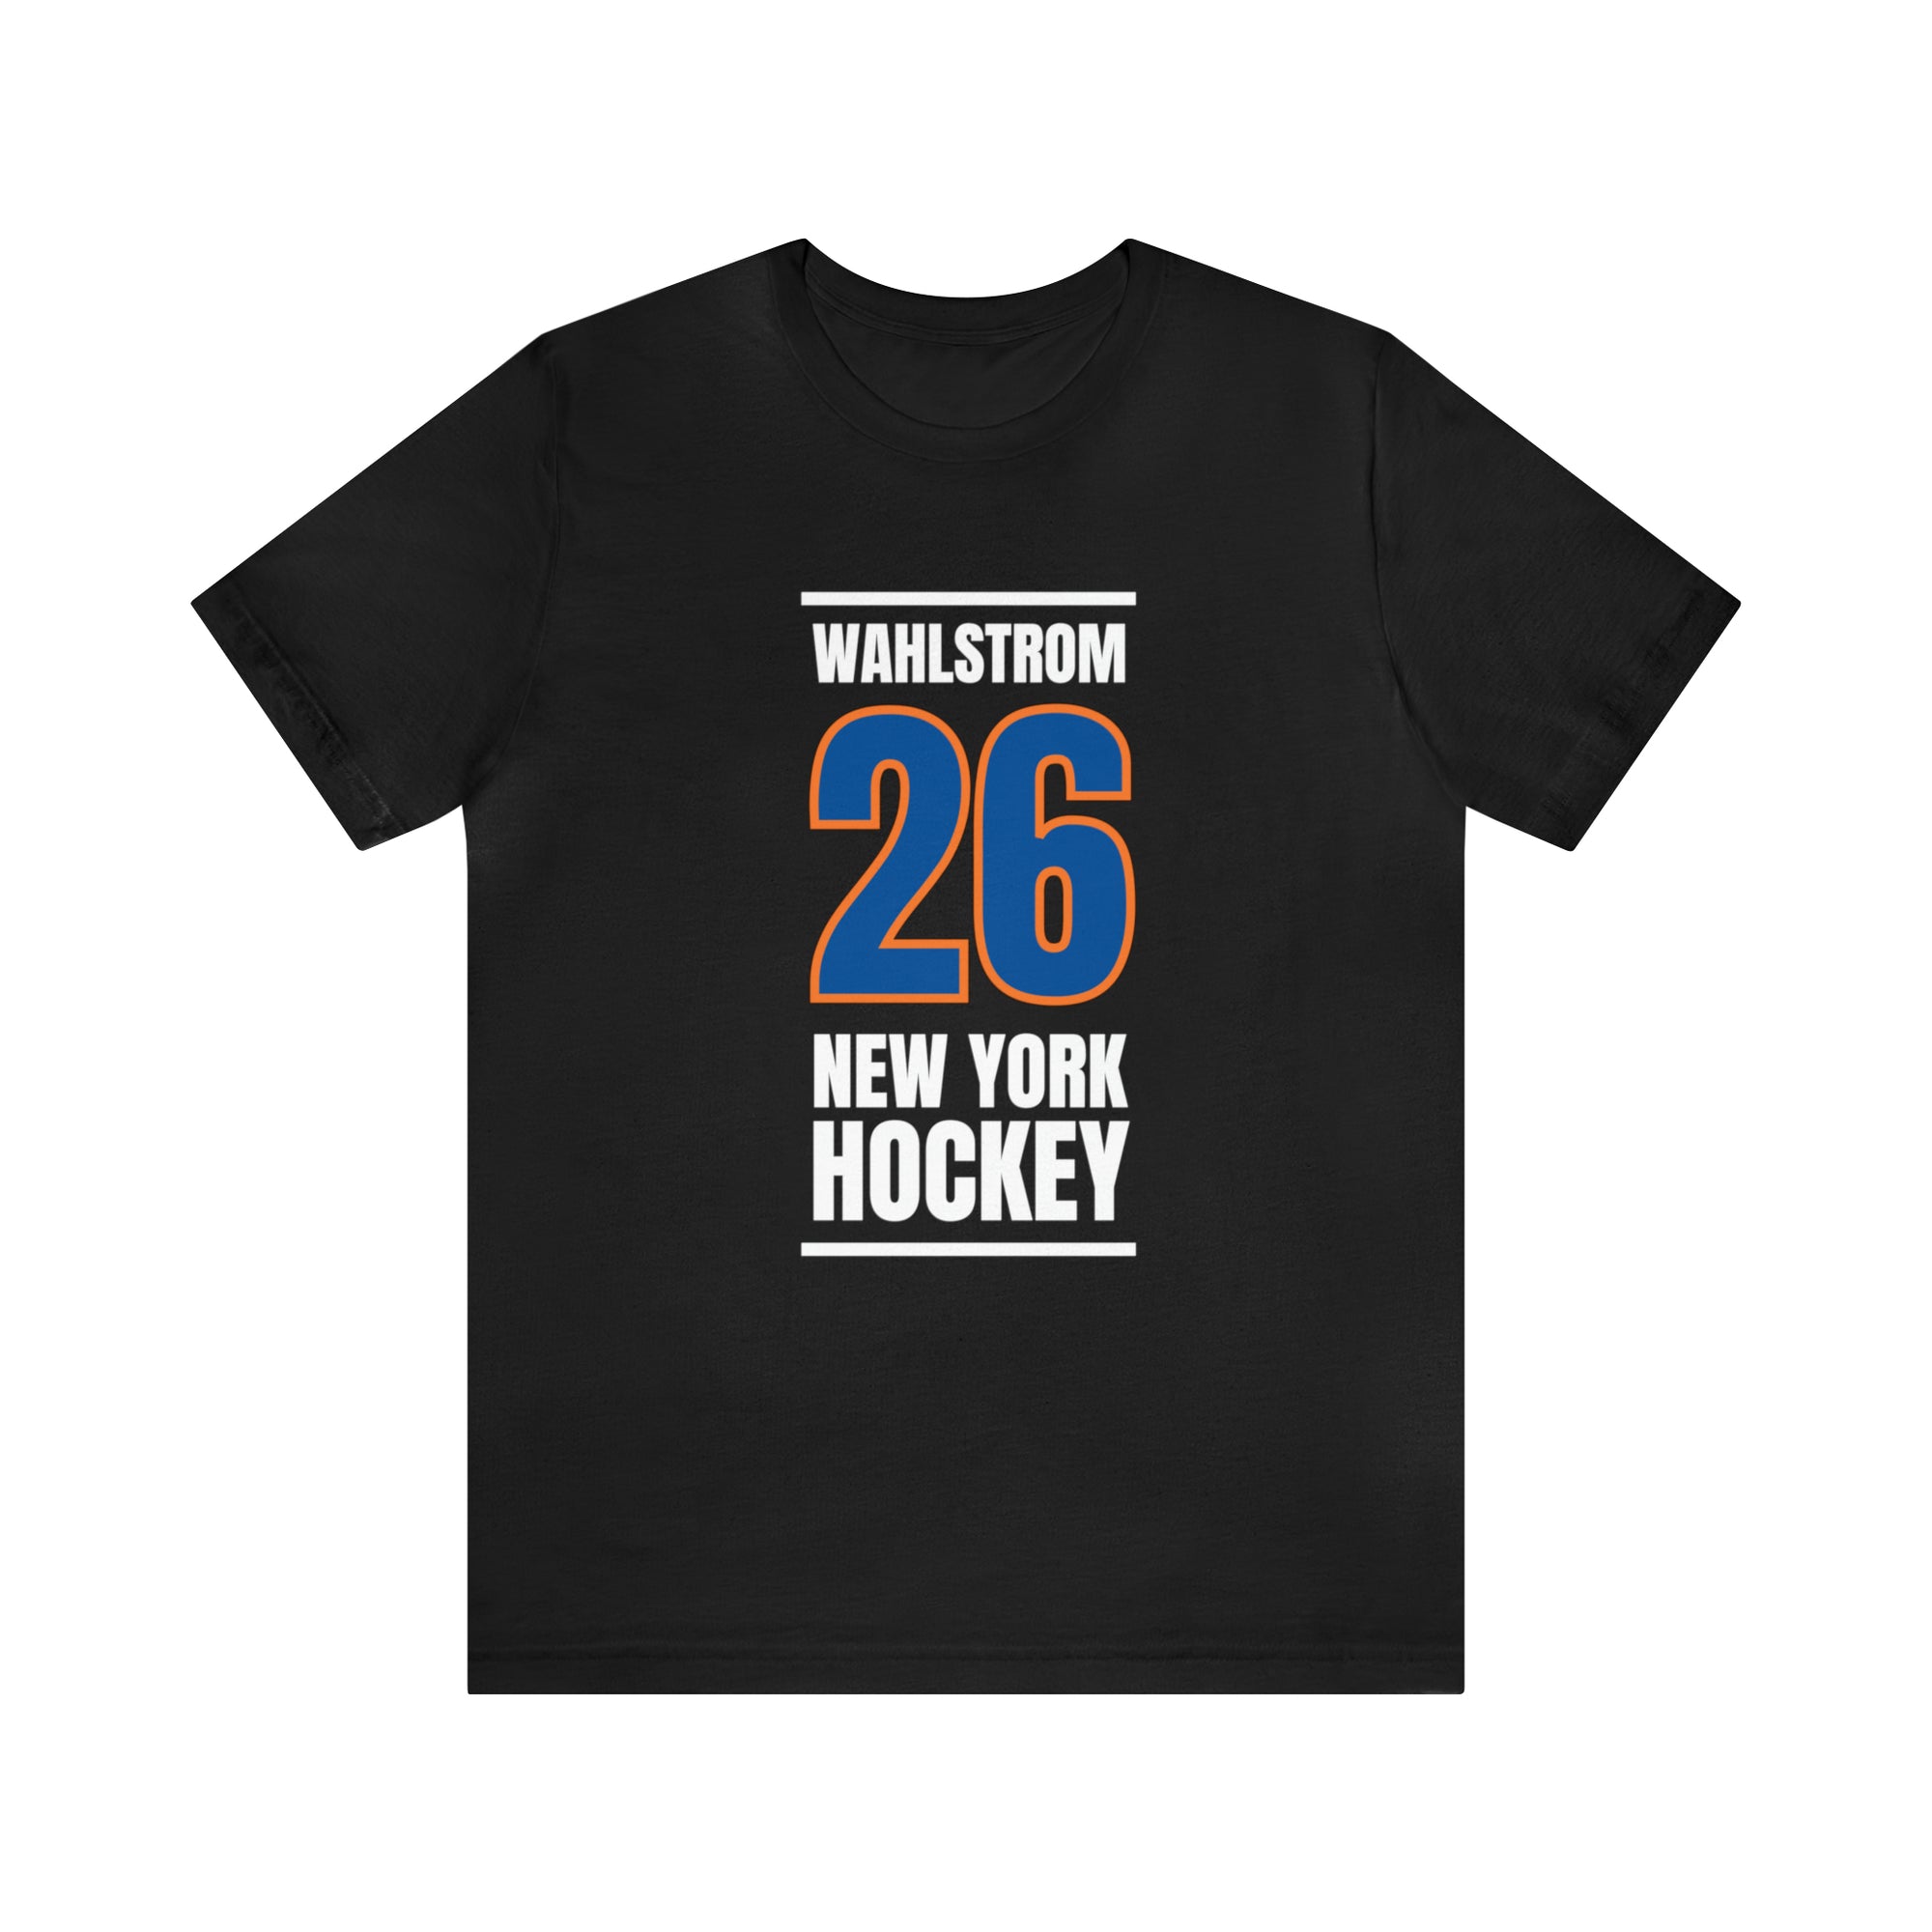 Wahlstrom 26 New York Hockey Blue Vertical Design Unisex T-Shirt